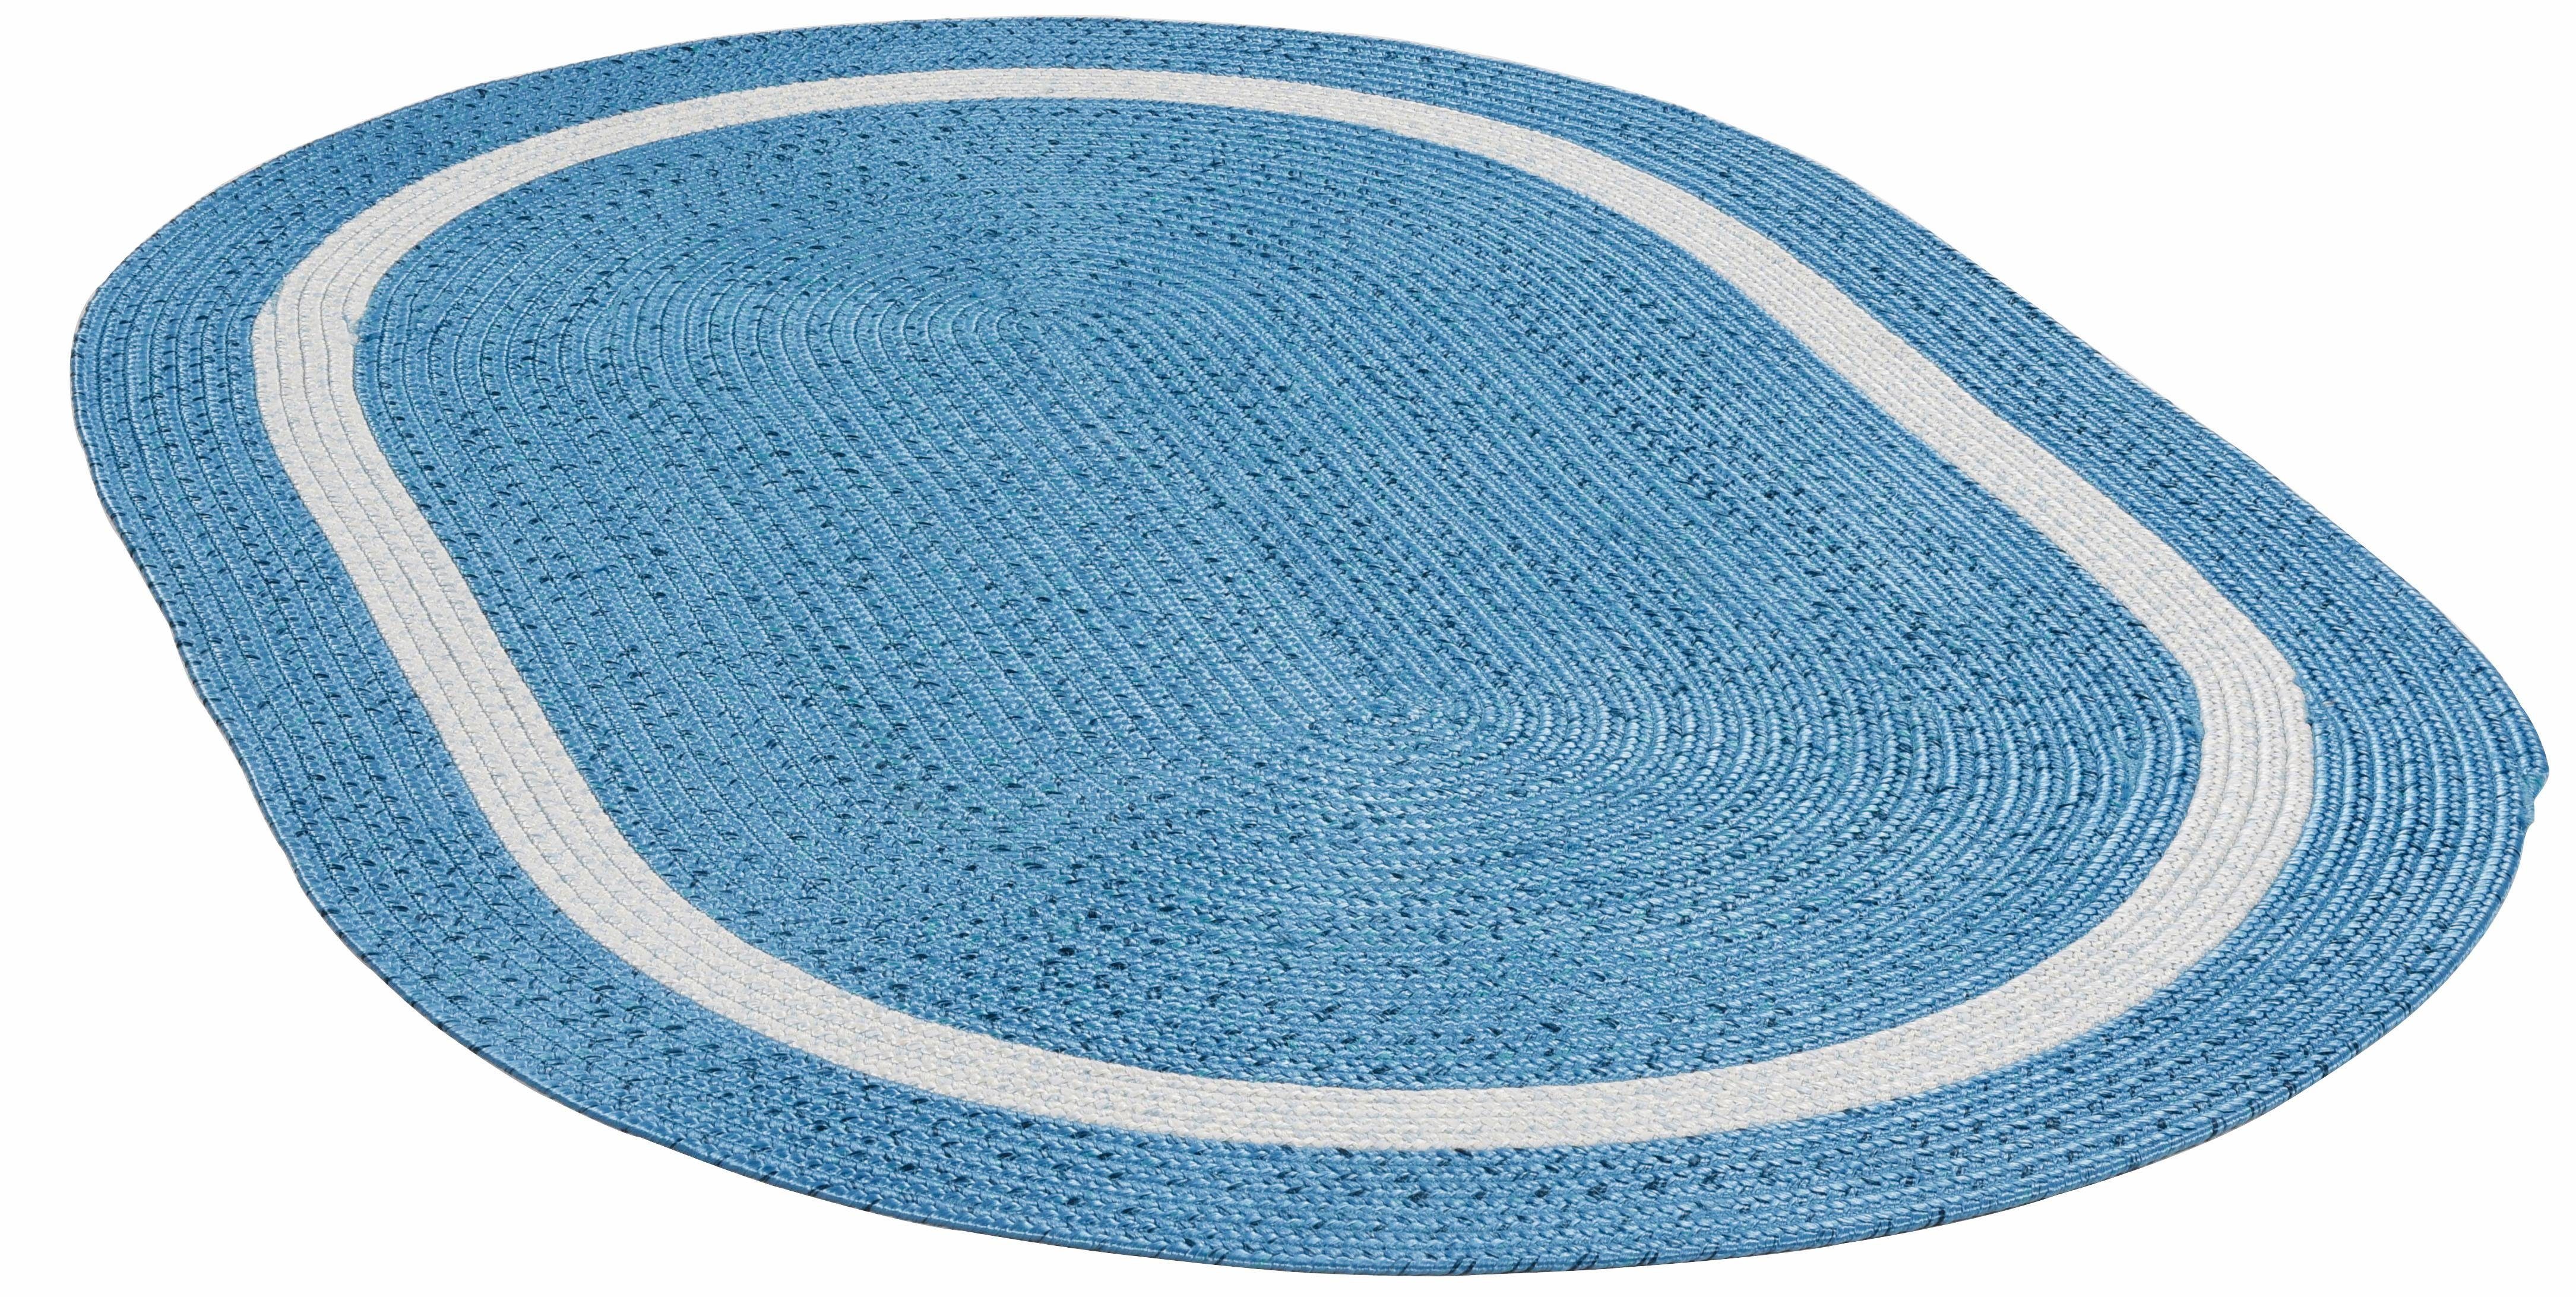 Teppich Benito, Gino Falcone, oval, Höhe: 6 mm, Flachgewebe, Uni-Farben,  mit Bordüre, In- und Outdoor geeignet